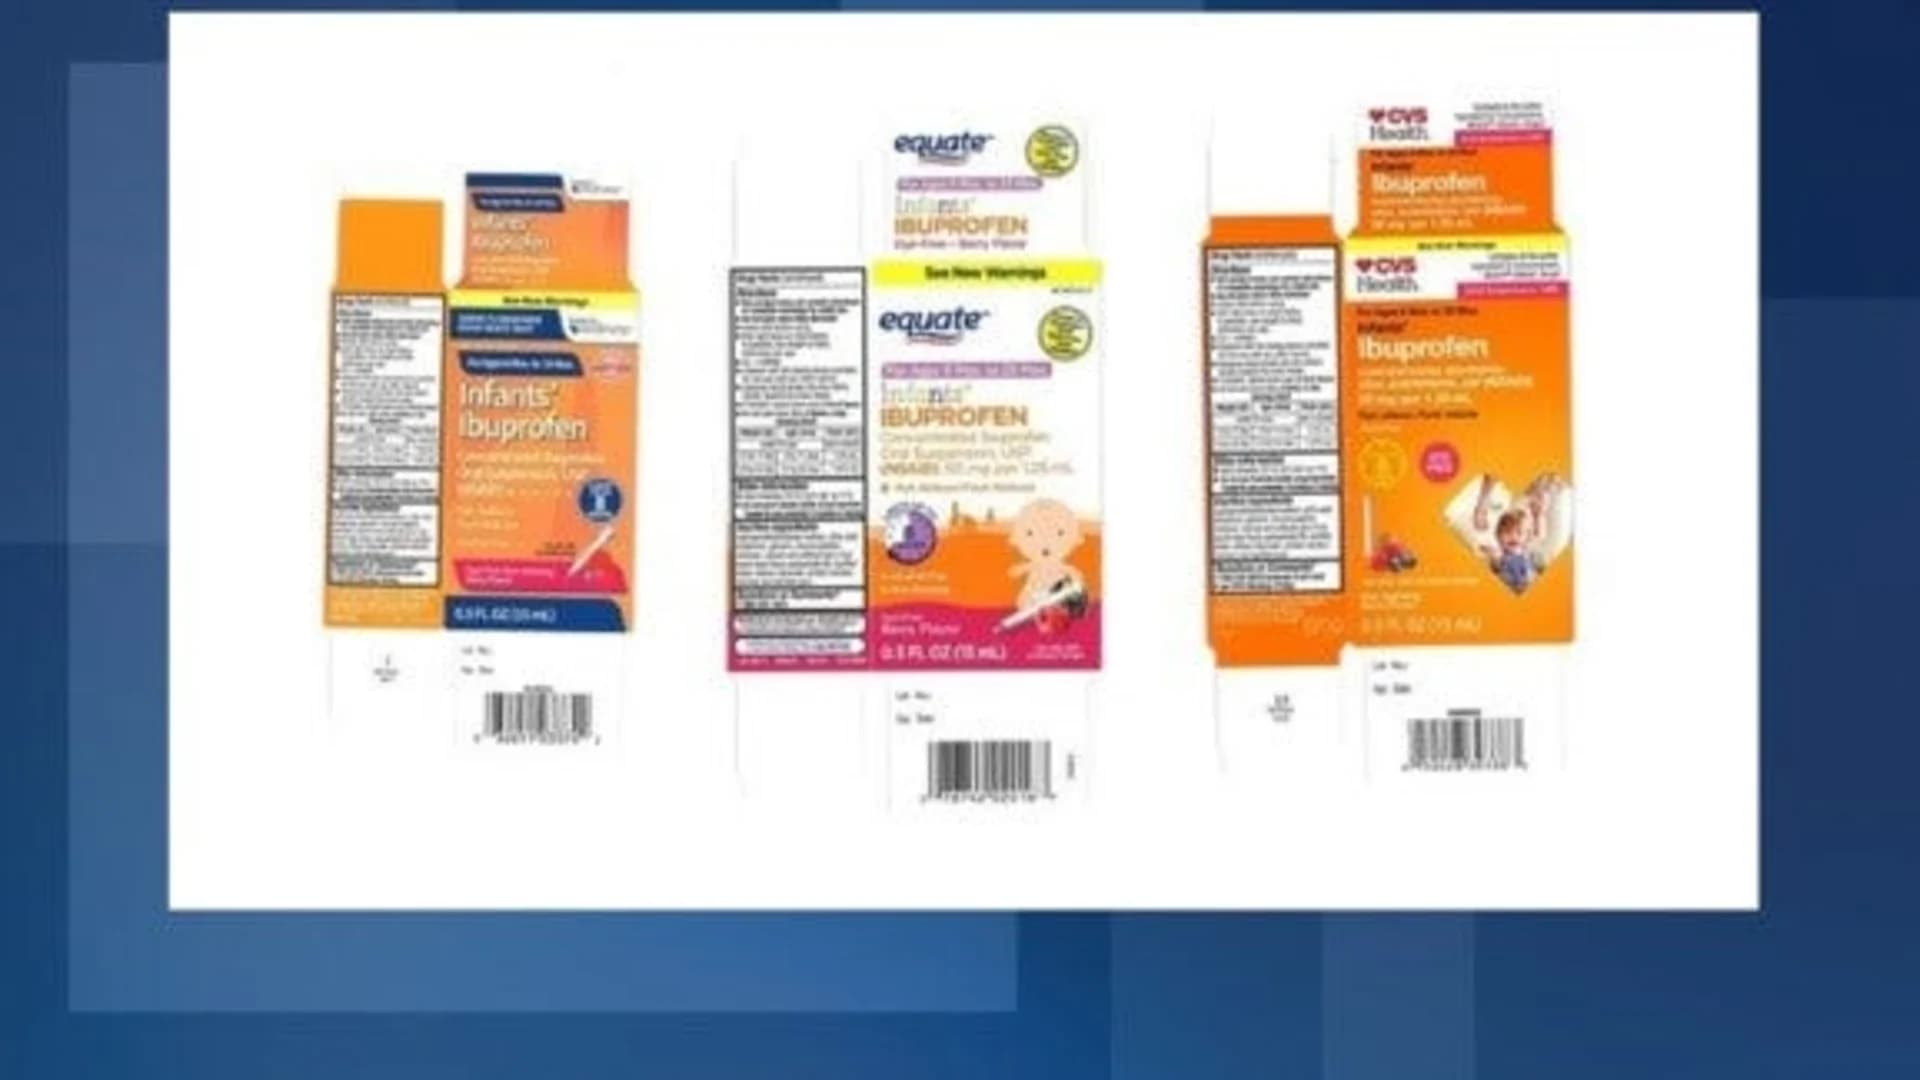 Tris Pharma, Inc. voluntarily recalls 3 lots of infant ibuprofen